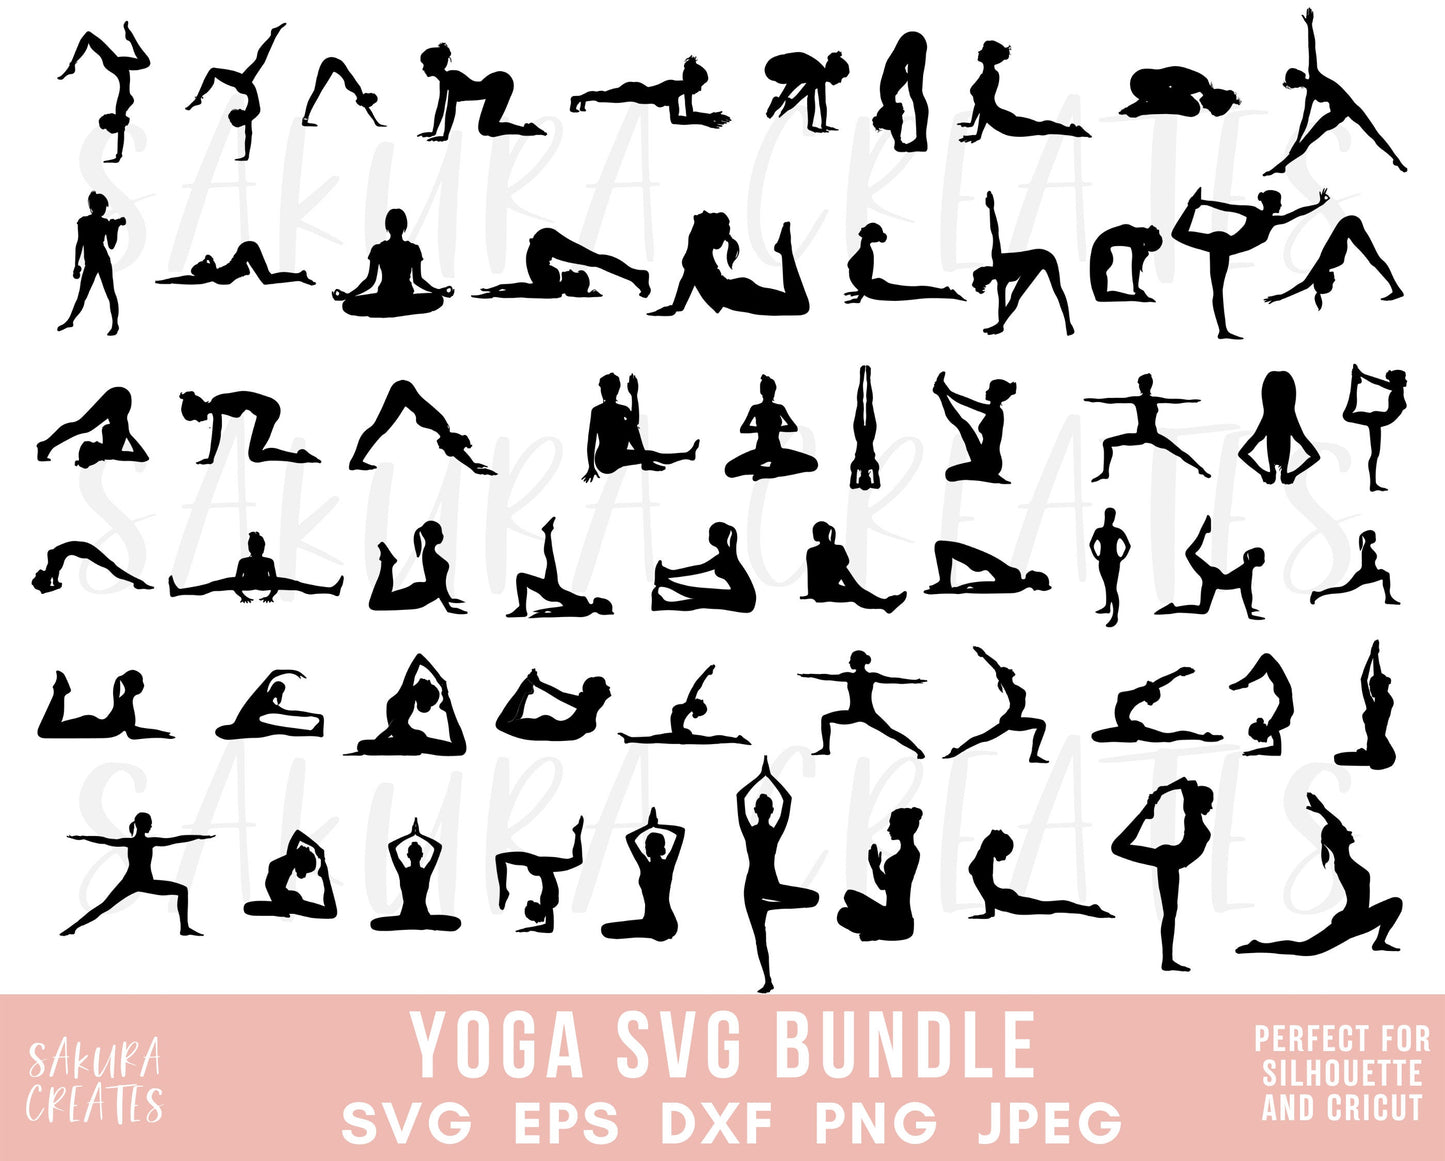 160+ Yoga SVG Meditation svg Yoga pose Namaste svg fitness svg Lotus pose yoga clipart pilates cut file for cricut silhouette files easy cut